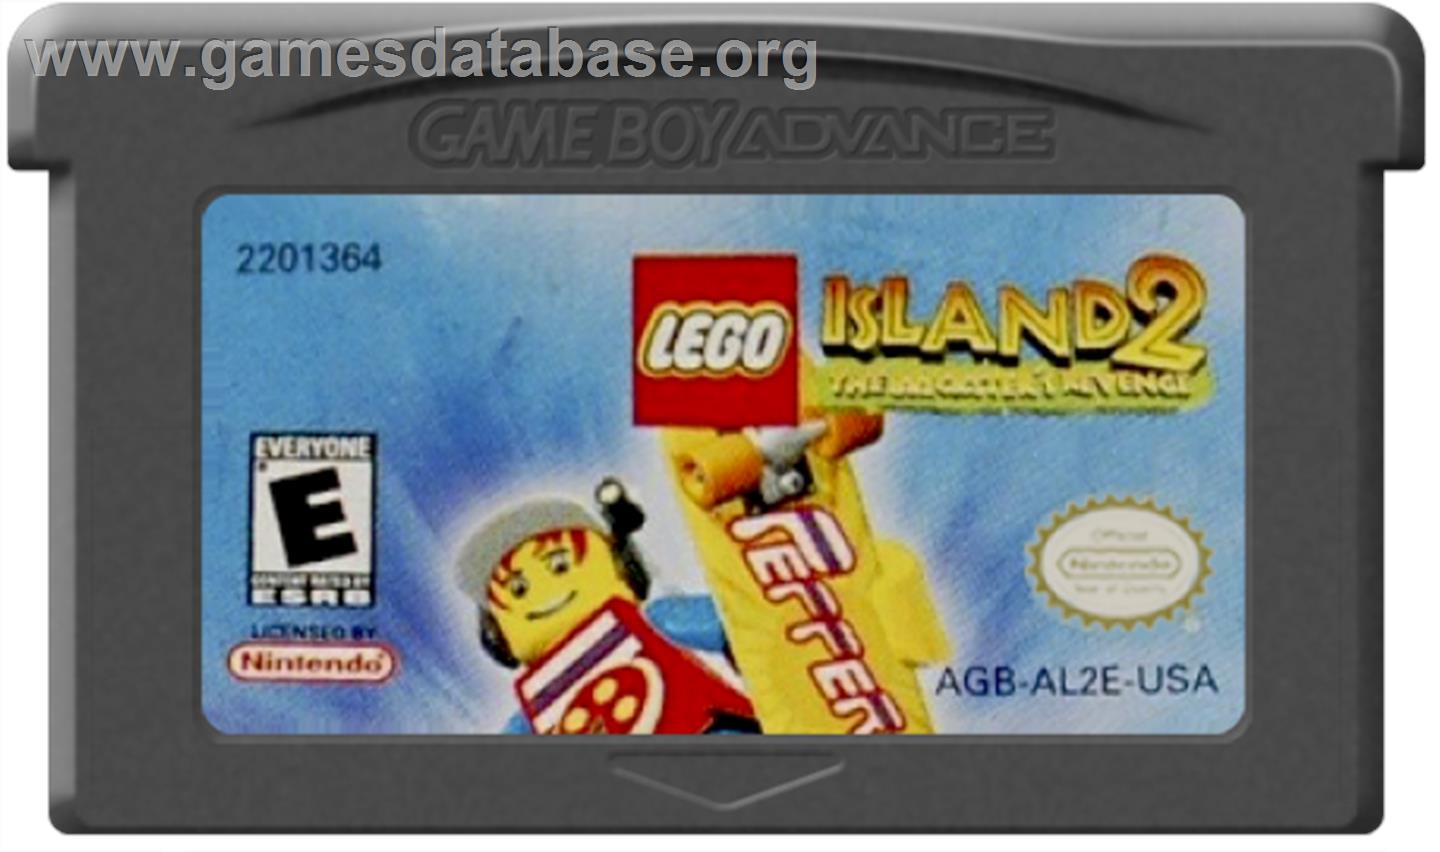 LEGO Island 2: The Brickster's Revenge - Nintendo Game Boy Advance - Artwork - Cartridge